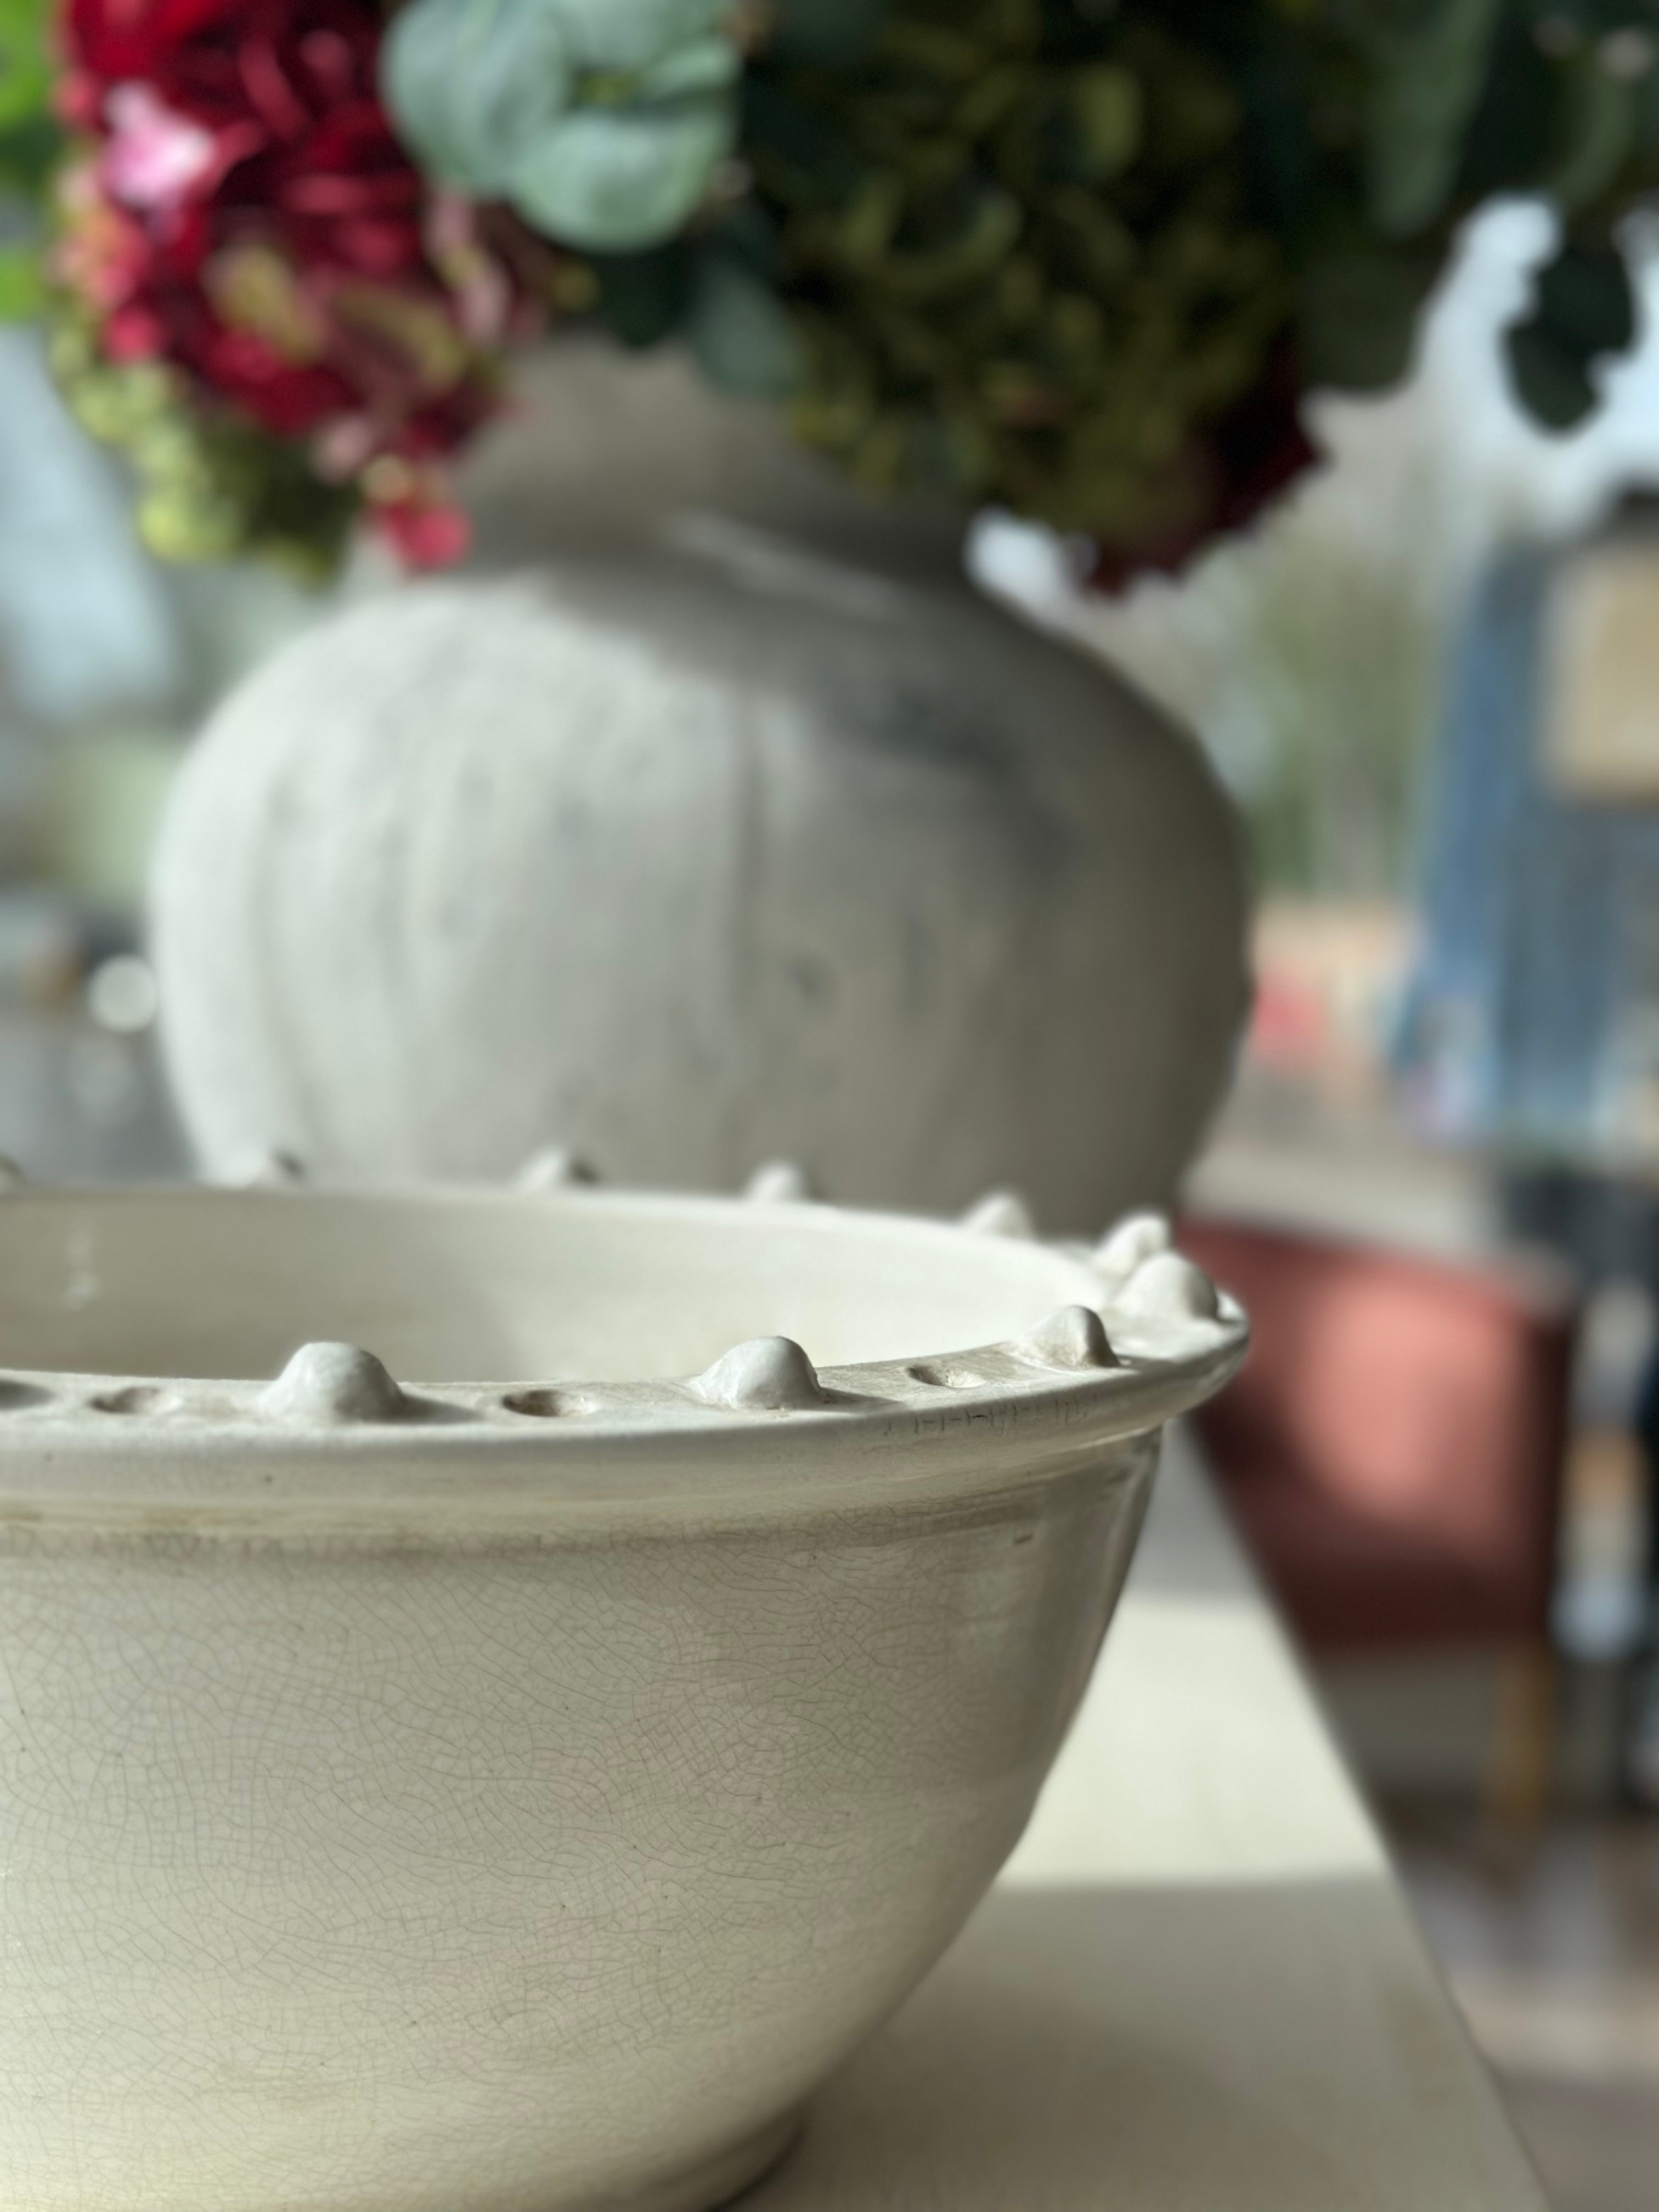 Distressed White Ceramic Bowl